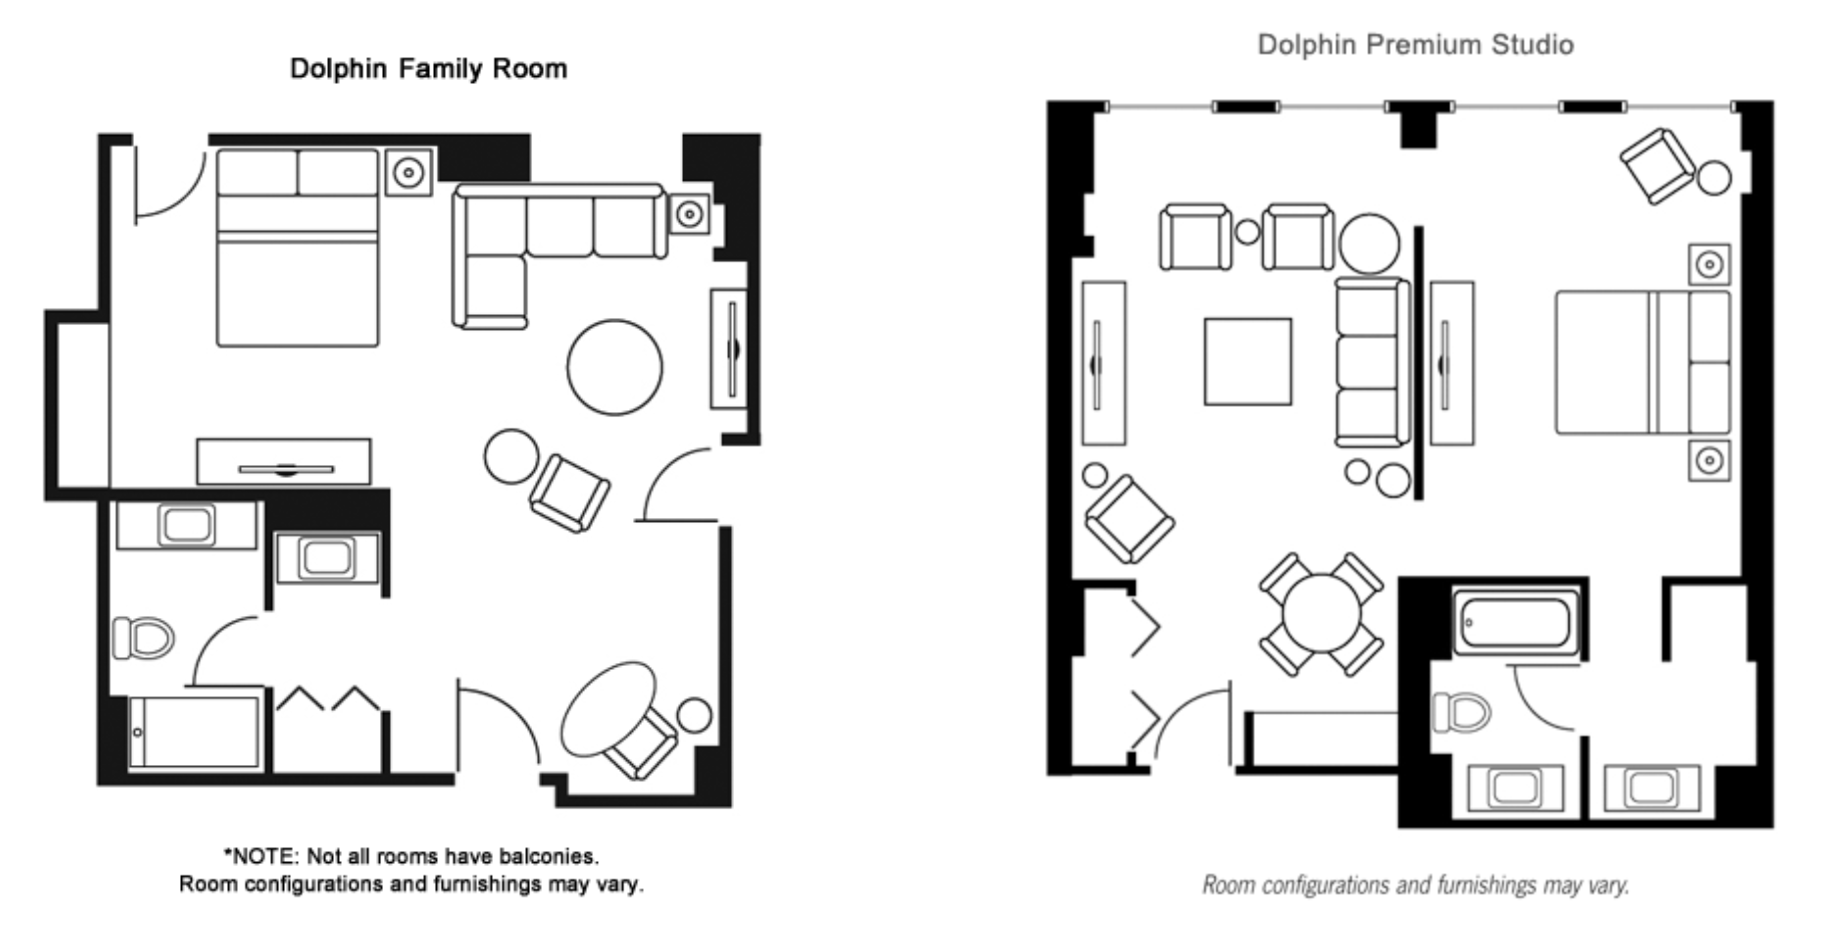 Dolphin Family Room Floor Plan